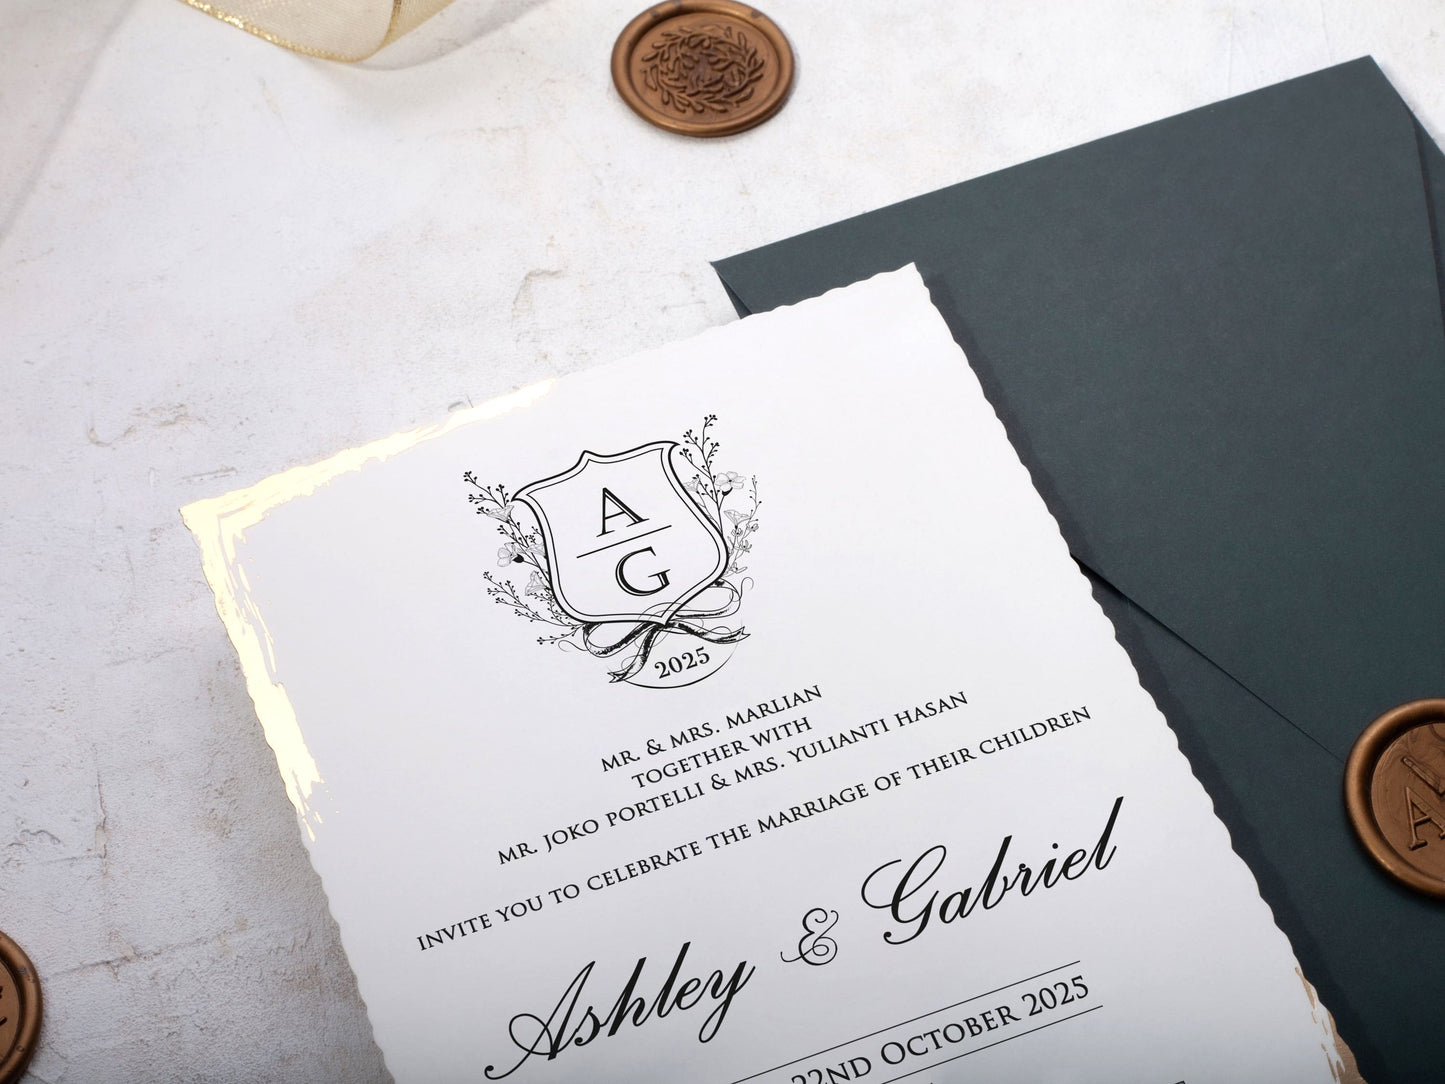 Deckled Edge Wedding Invitation with Green Envelope